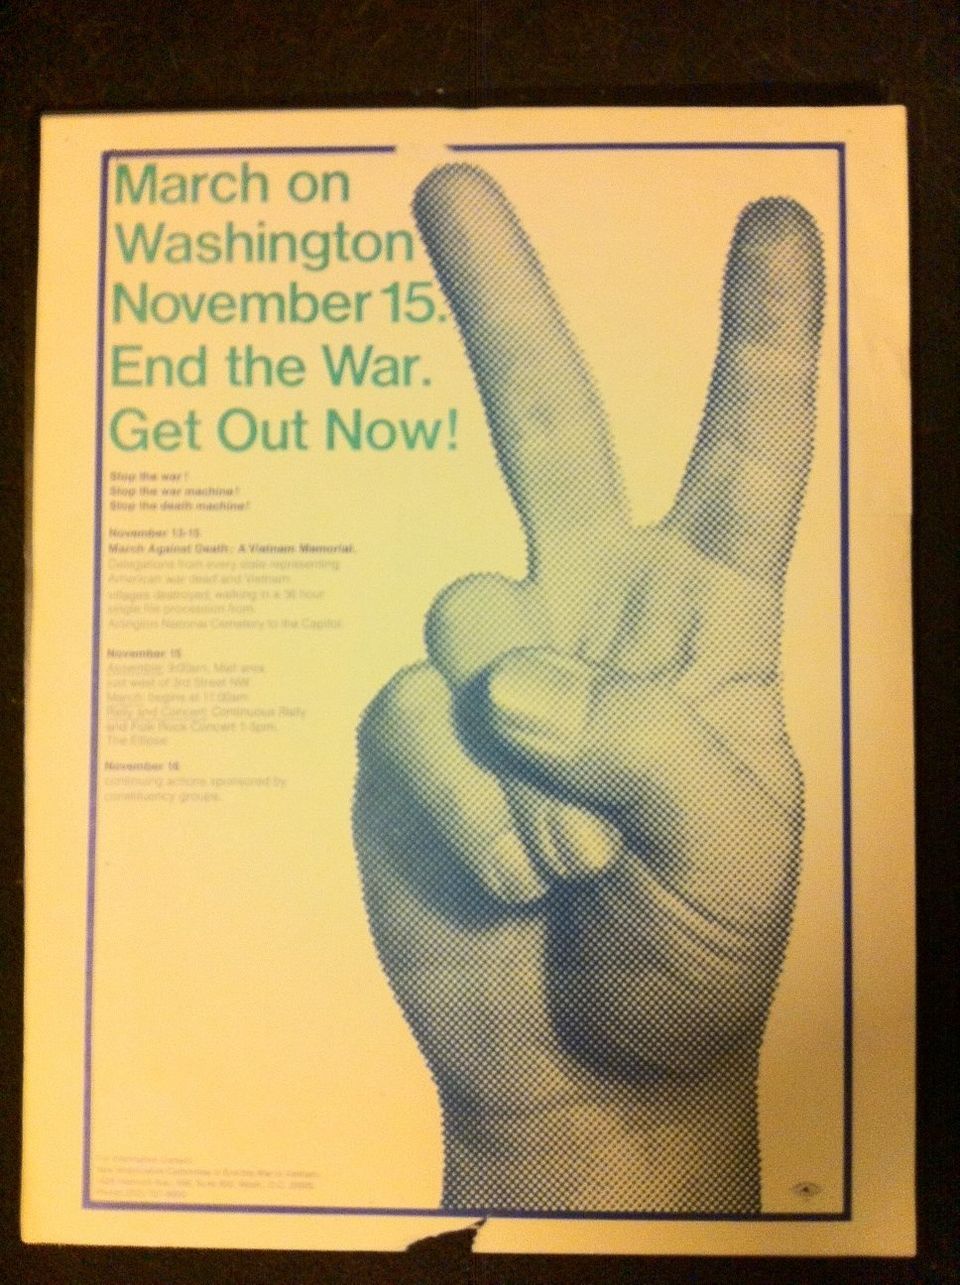 Anti-Vietnam War Demonstration, 1969